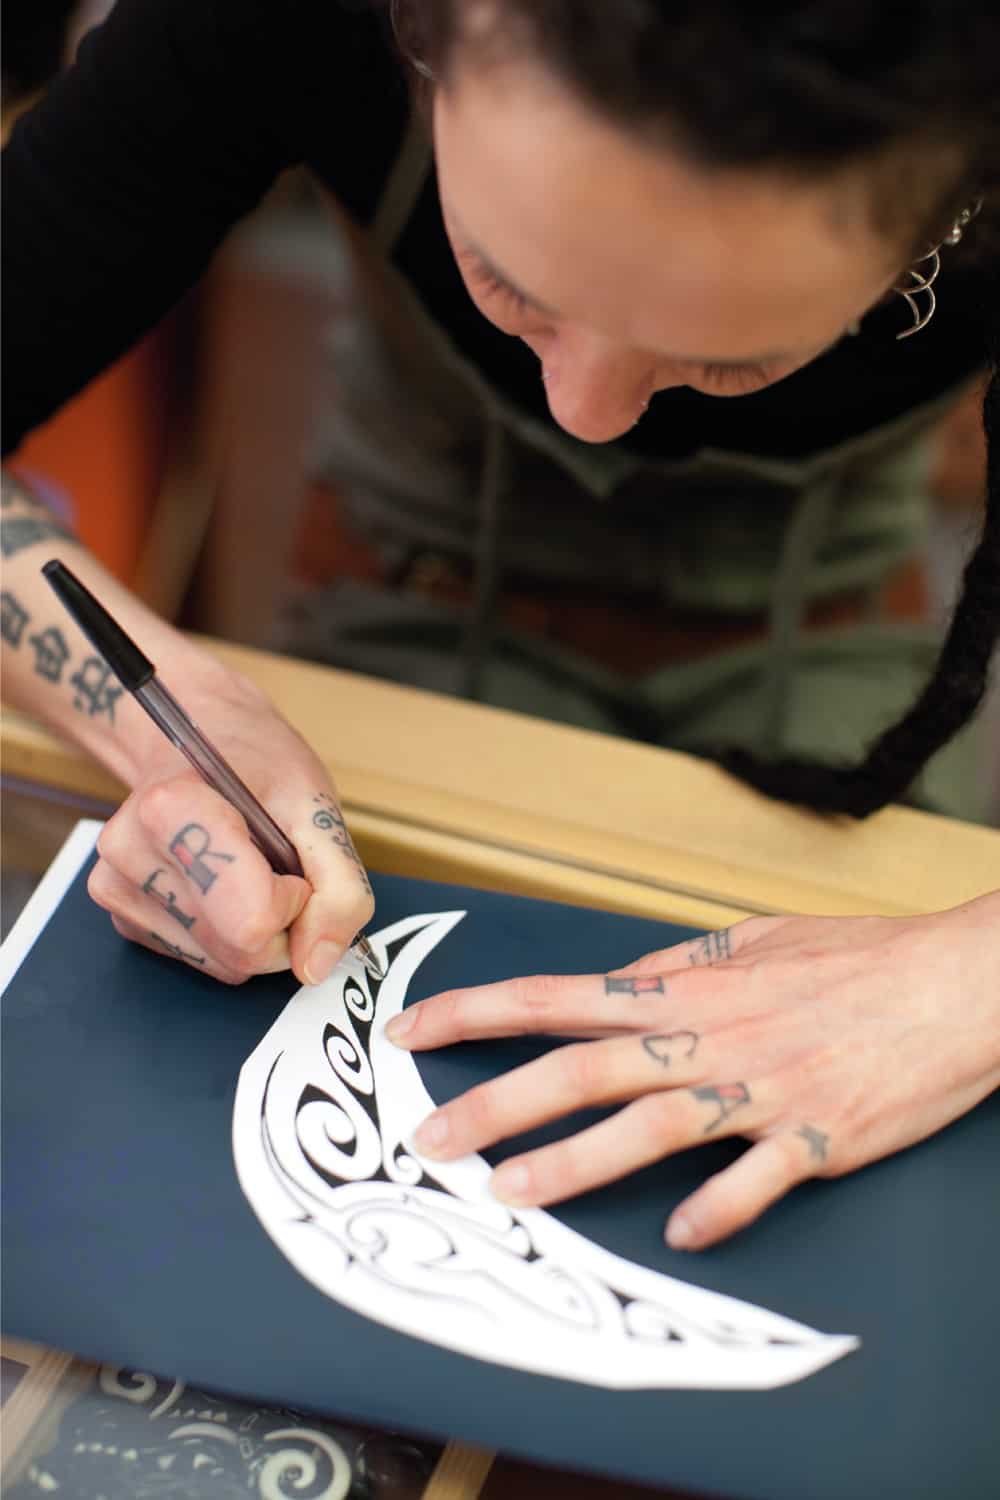 Artist making the stencil transfer using ballpoint pen